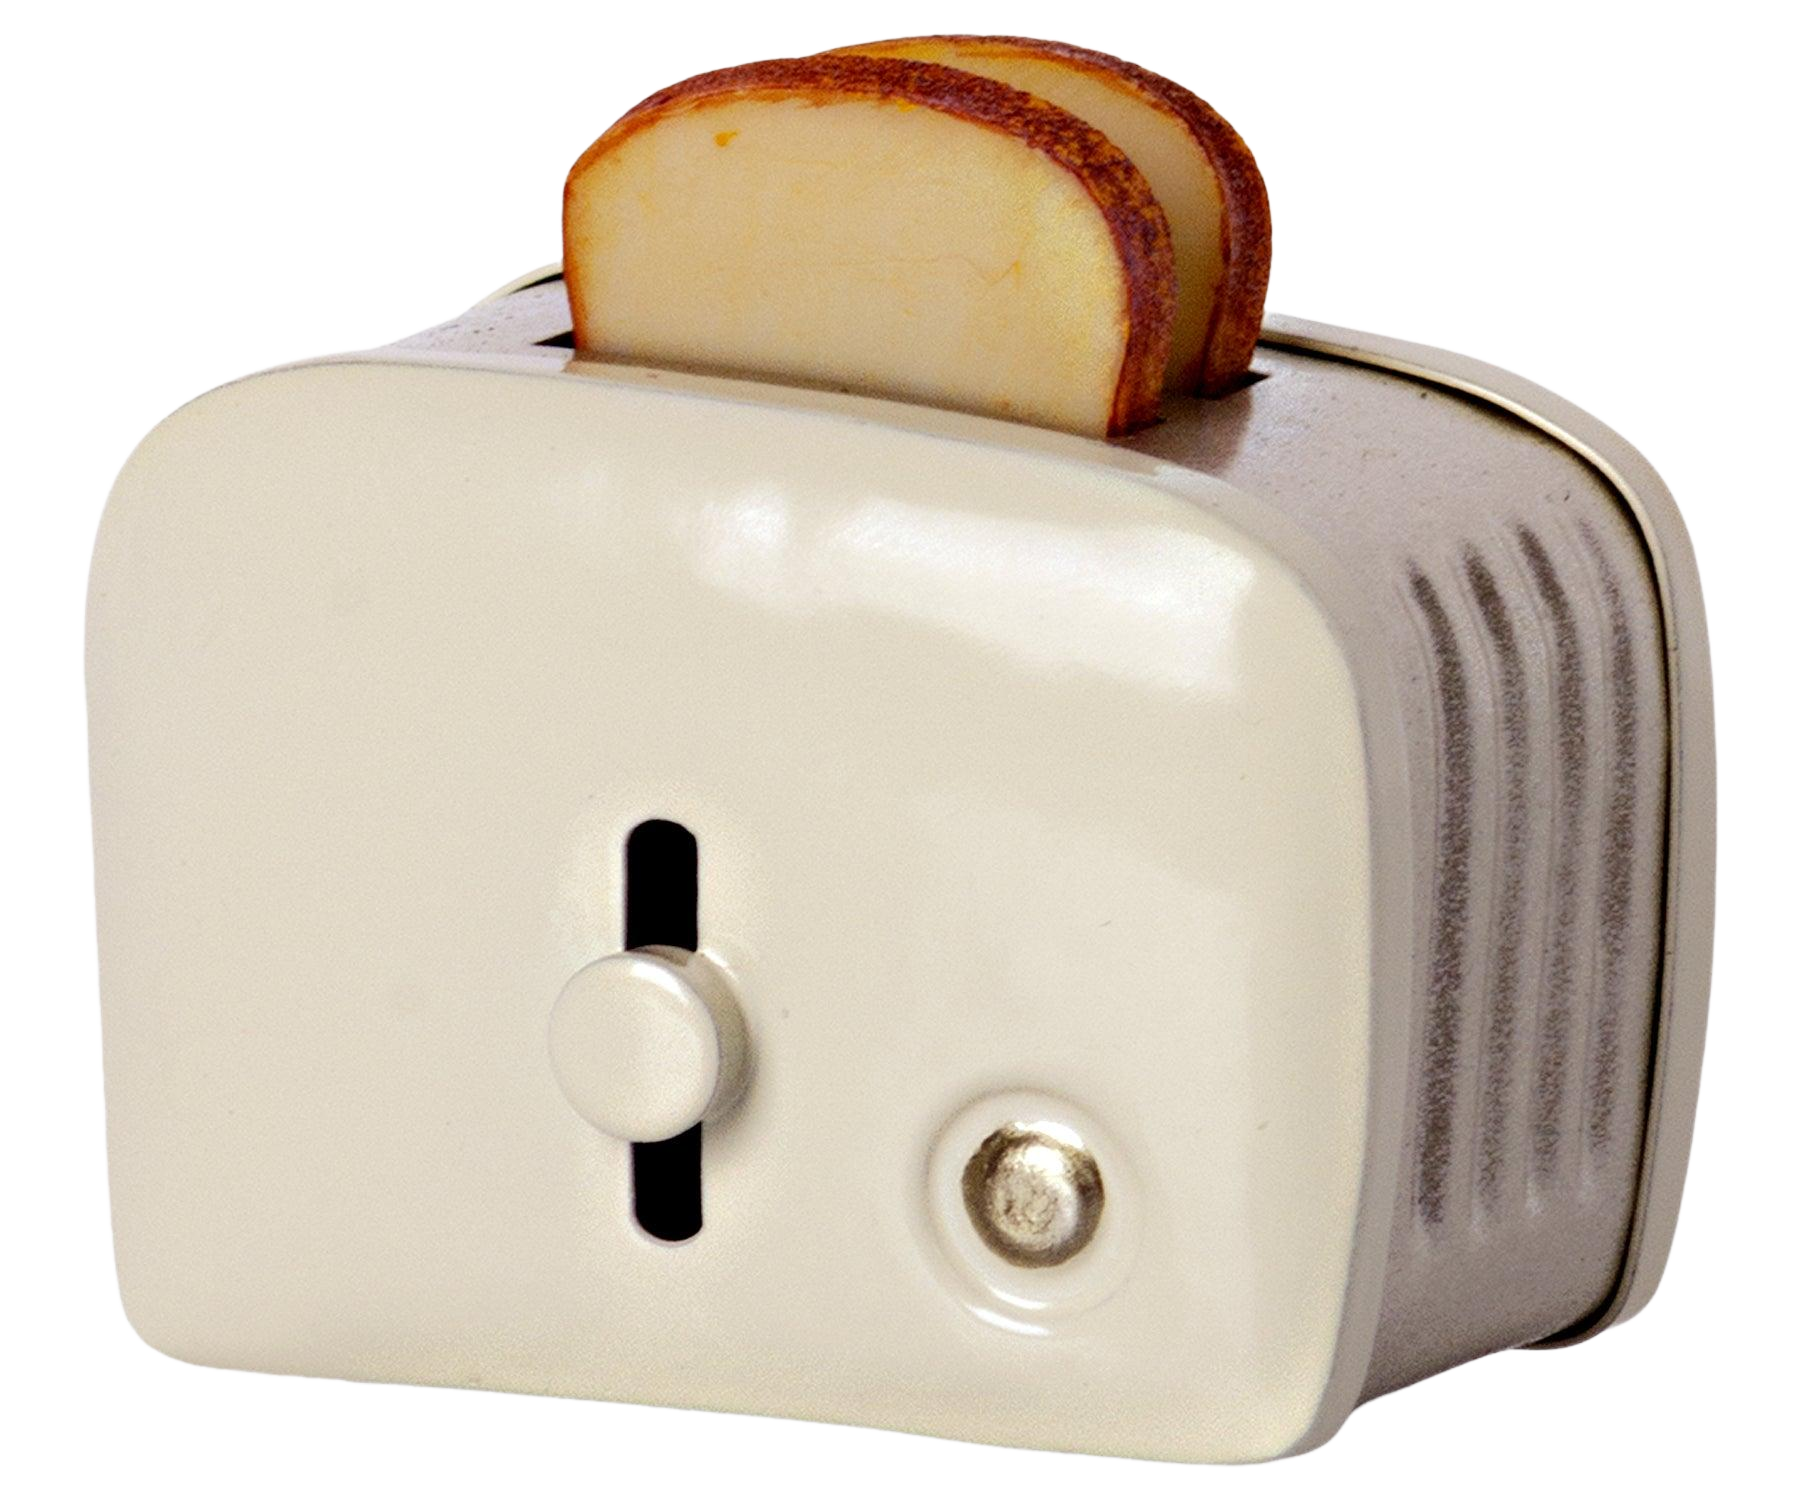 Miniature Toaster & Bread, Off-white